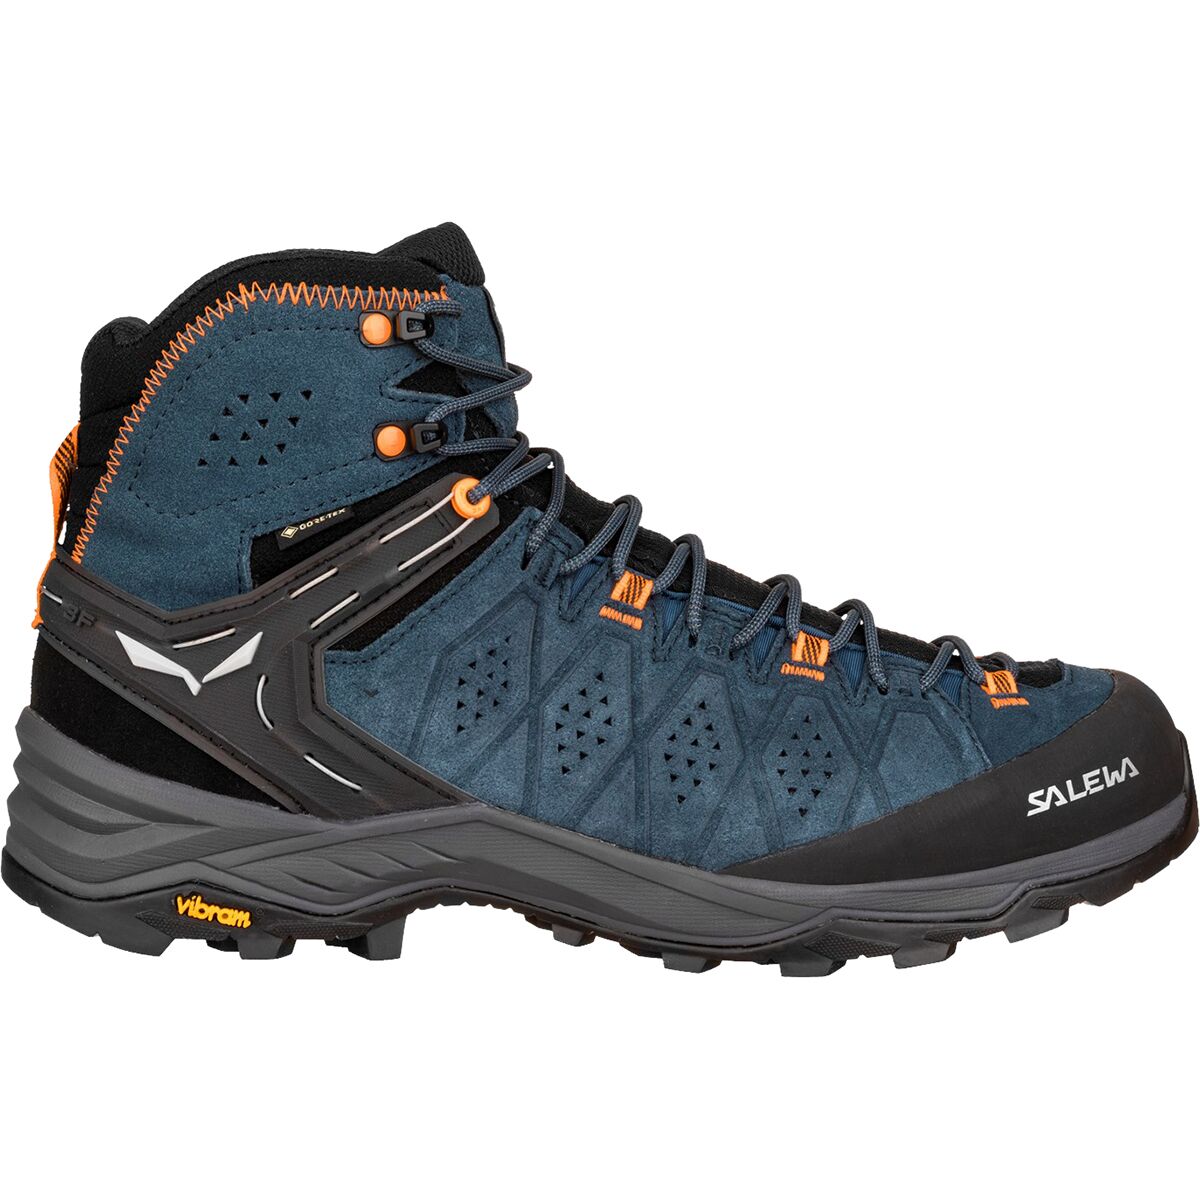 Alp Trainer 2 Mid GTX Hiking Boot - Men